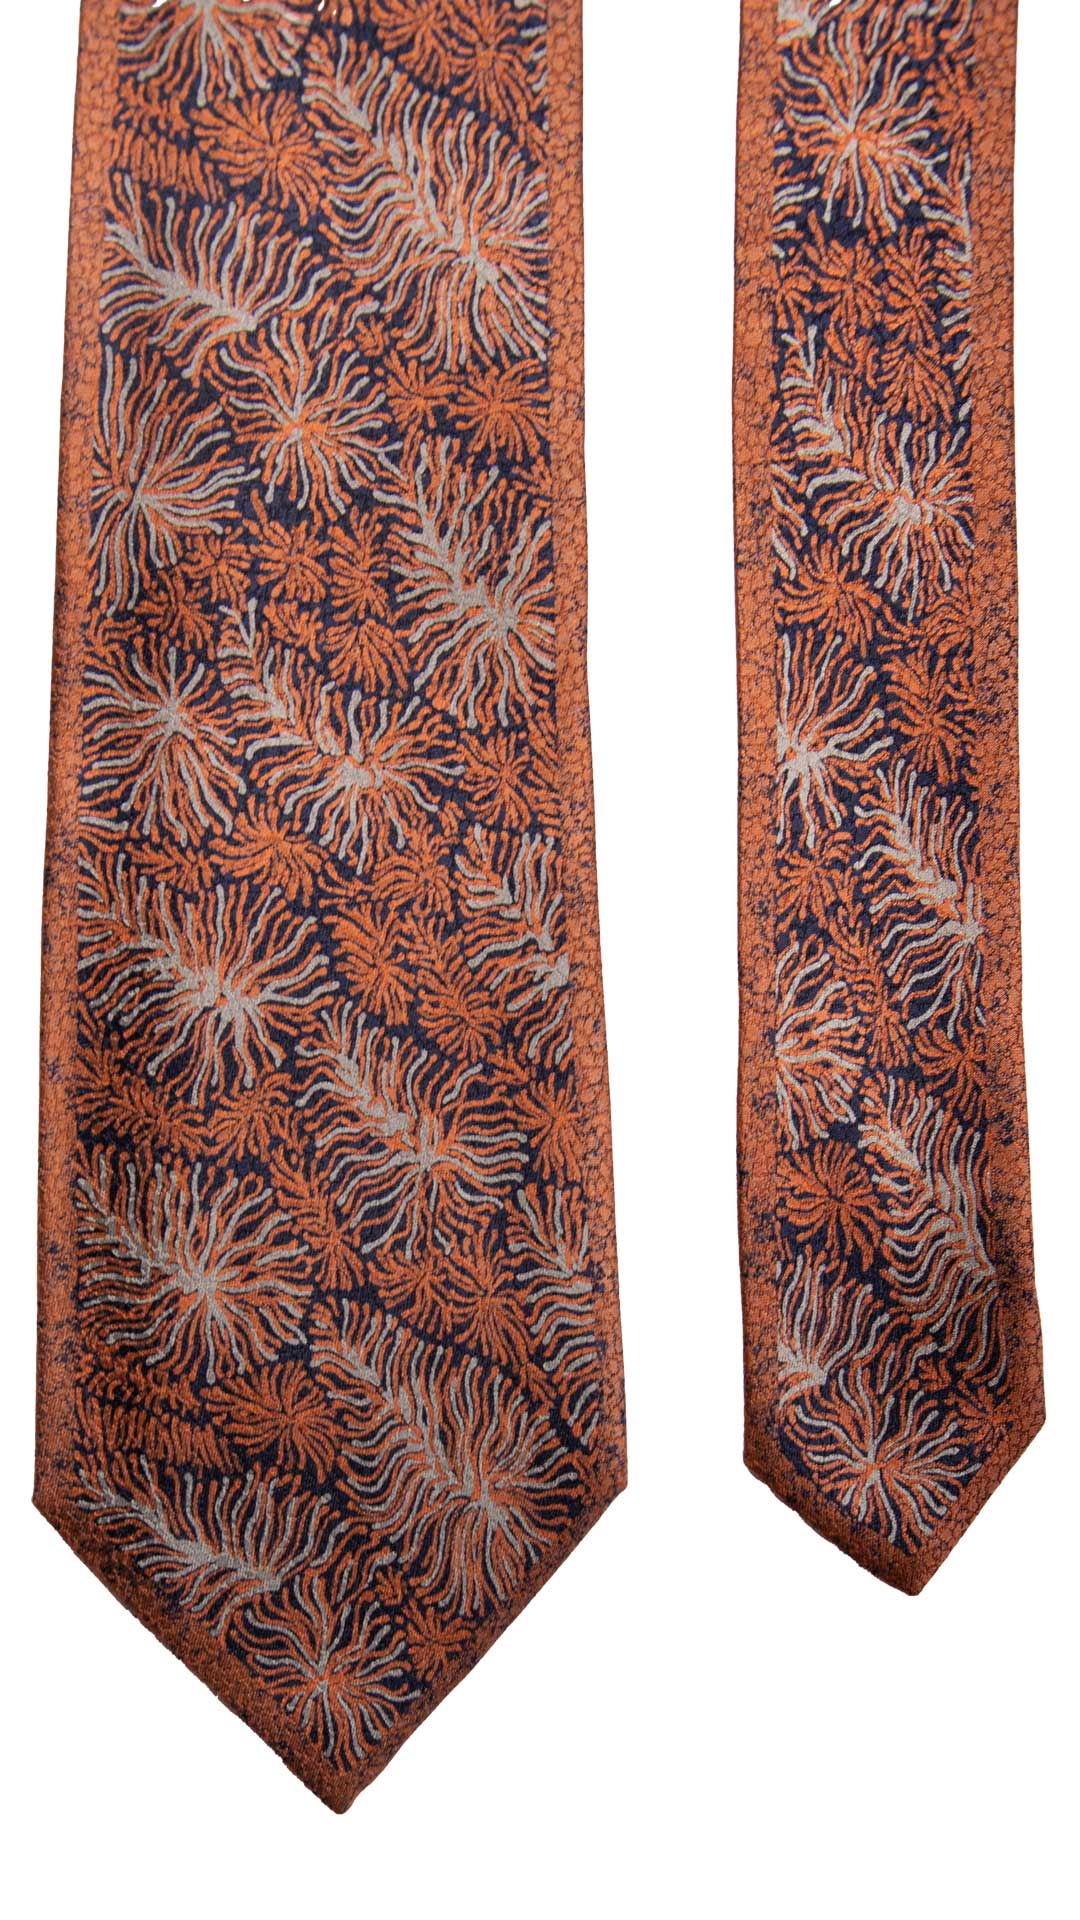 Cravatta Vintage di Seta Jacquard Color Mattone Fantasia Blu Grigio Argento CV801 Pala